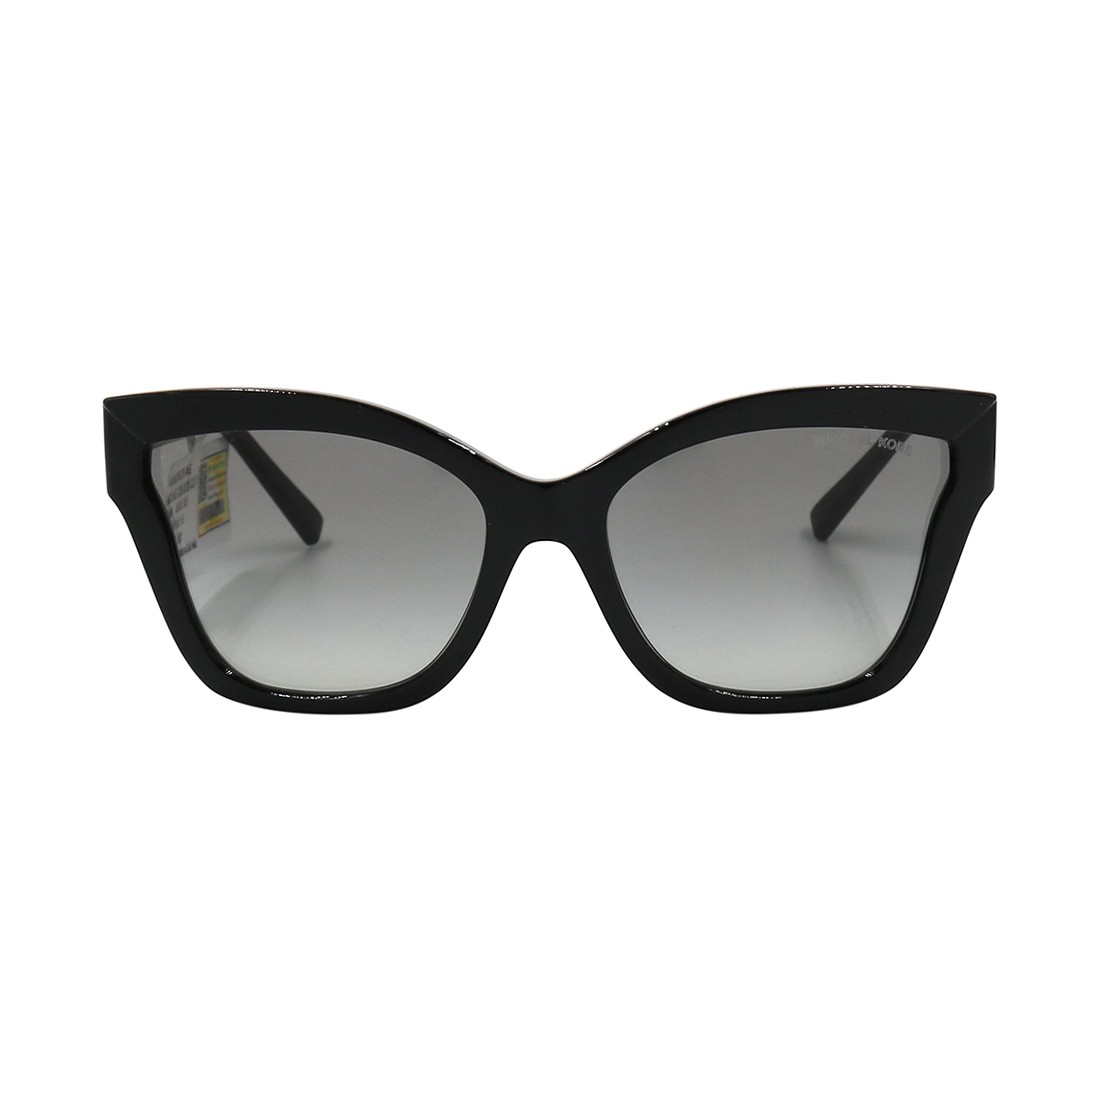 Mắt Kính Nữ Michael Kors MK5004 Chelsea Aviator Polarized Sunglasses  Mua  Sắm Hàng Hiệu